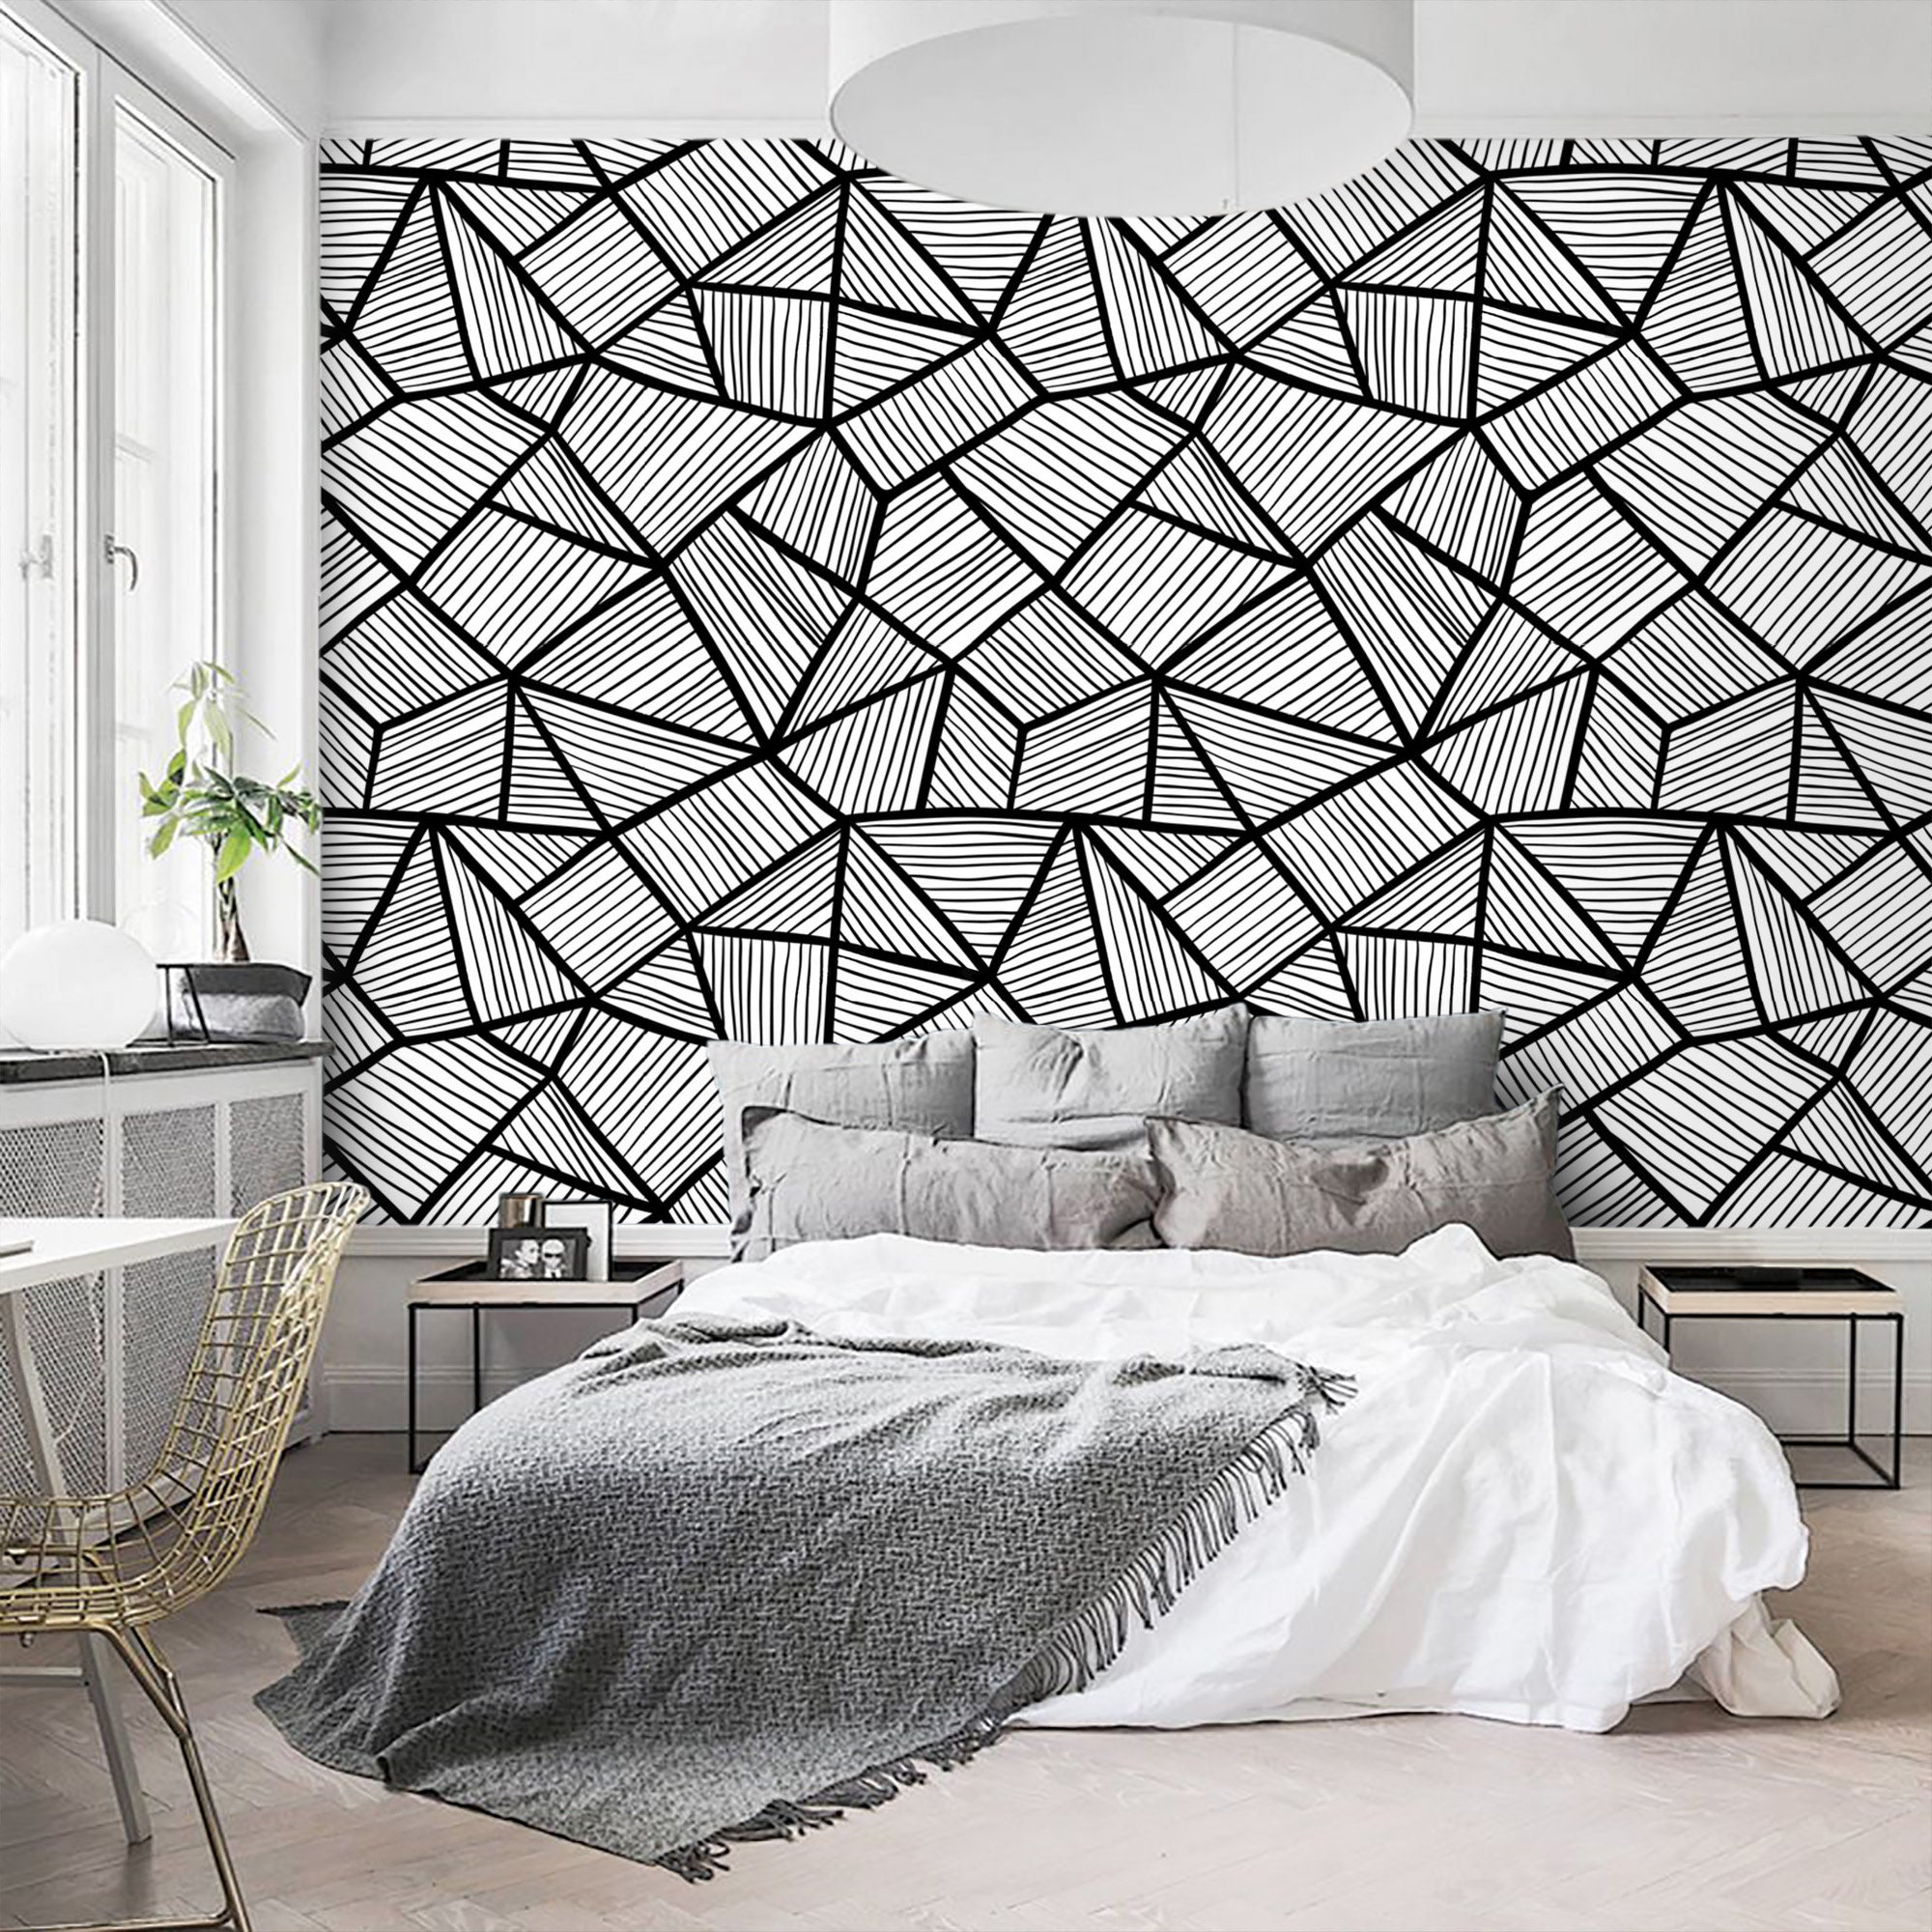 Geometric Wallpaper Black and White Abstract minimalist Peel | Etsy